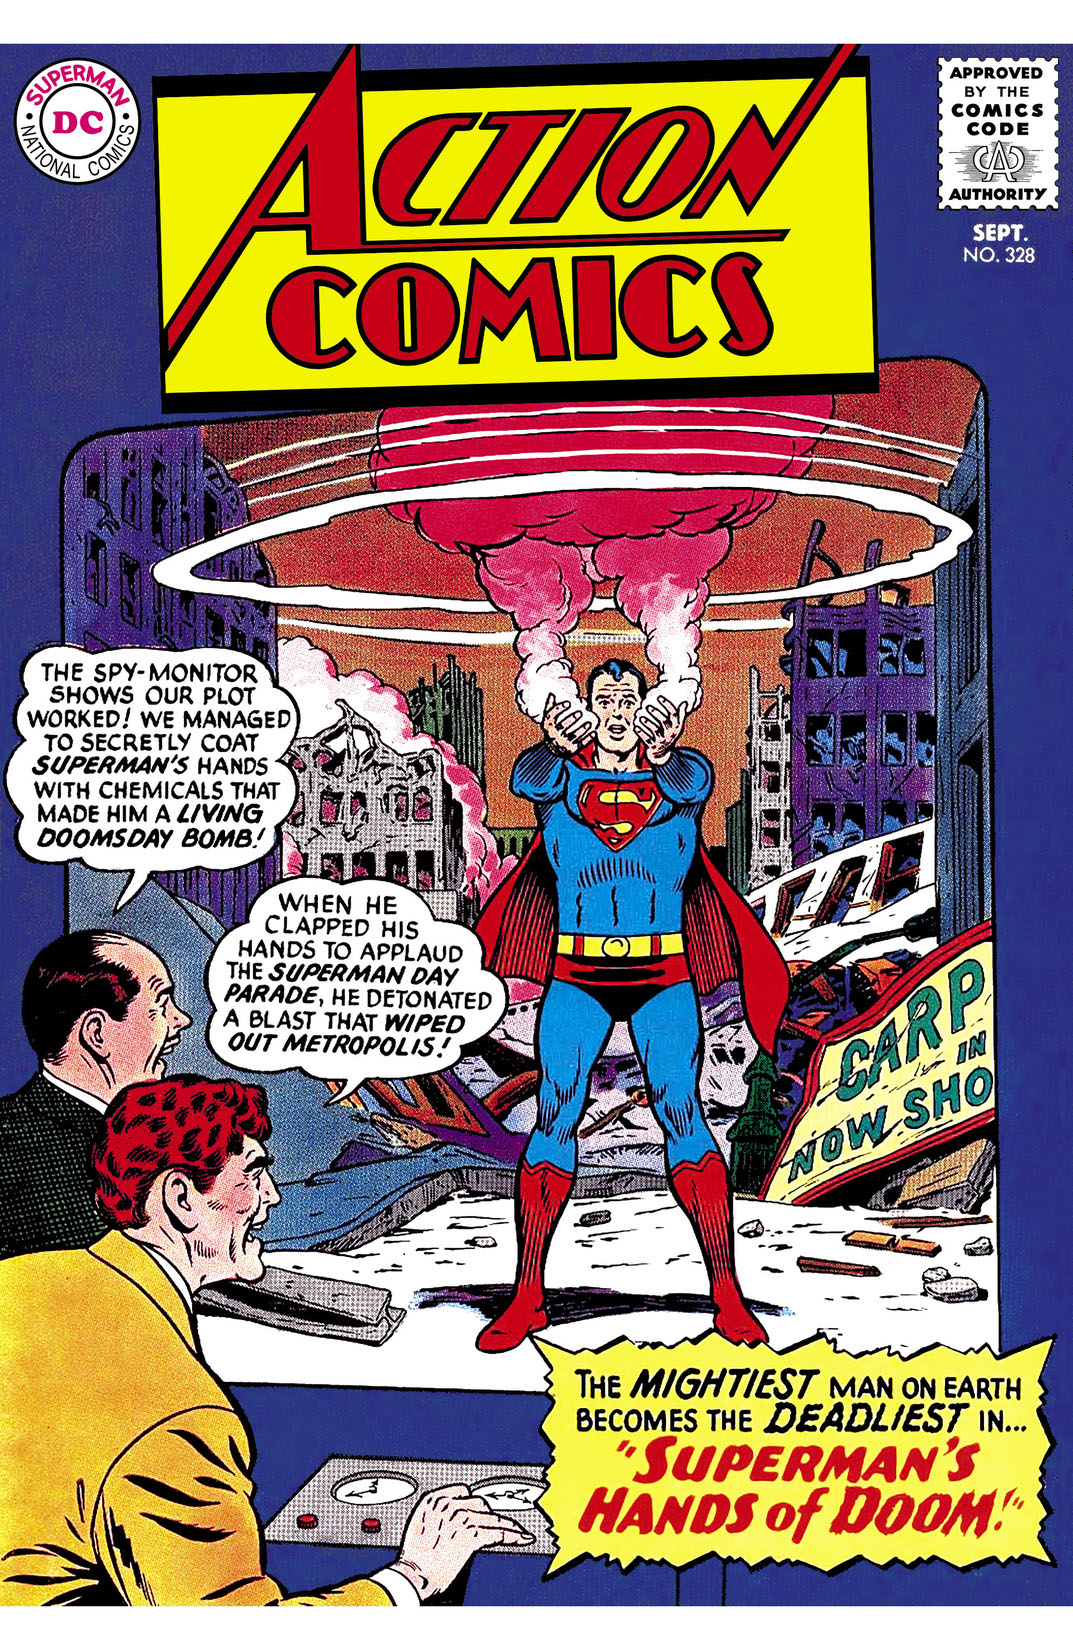 Action Comics (1938-) #328 preview images